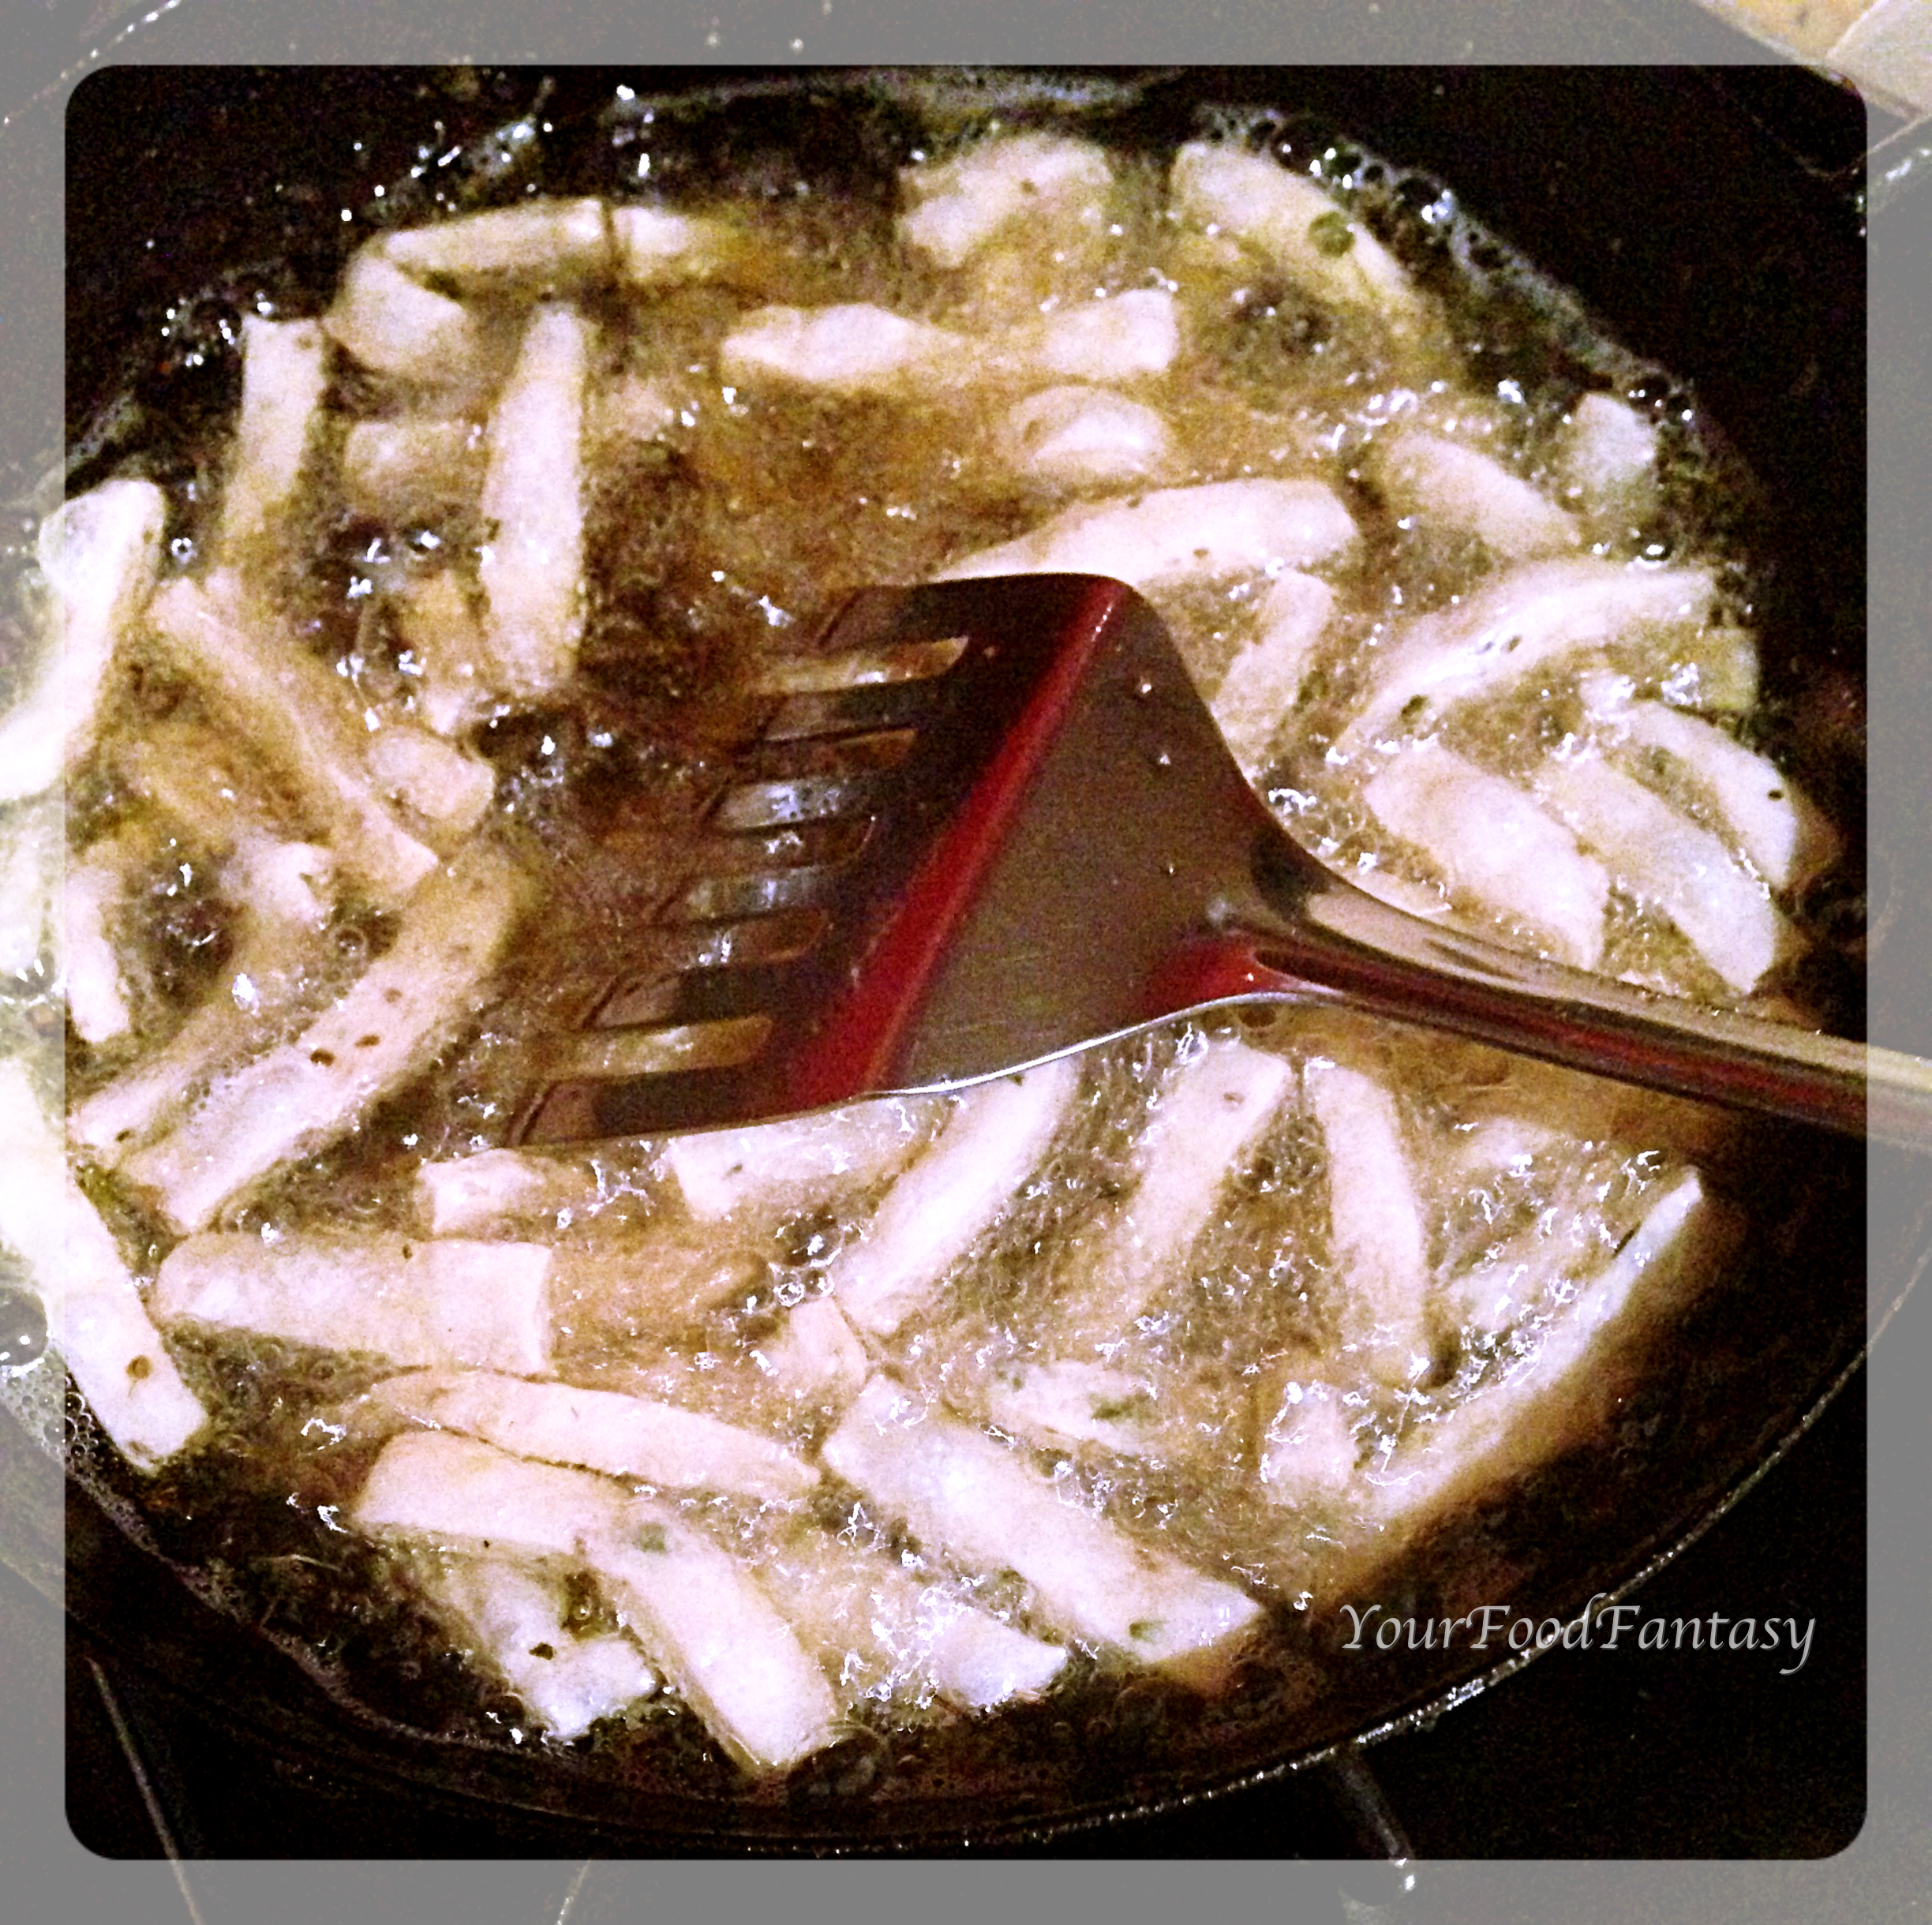 Namak Paray being fried | Namak Paray recipe at yourfoodfantasy.com by meenu gupta